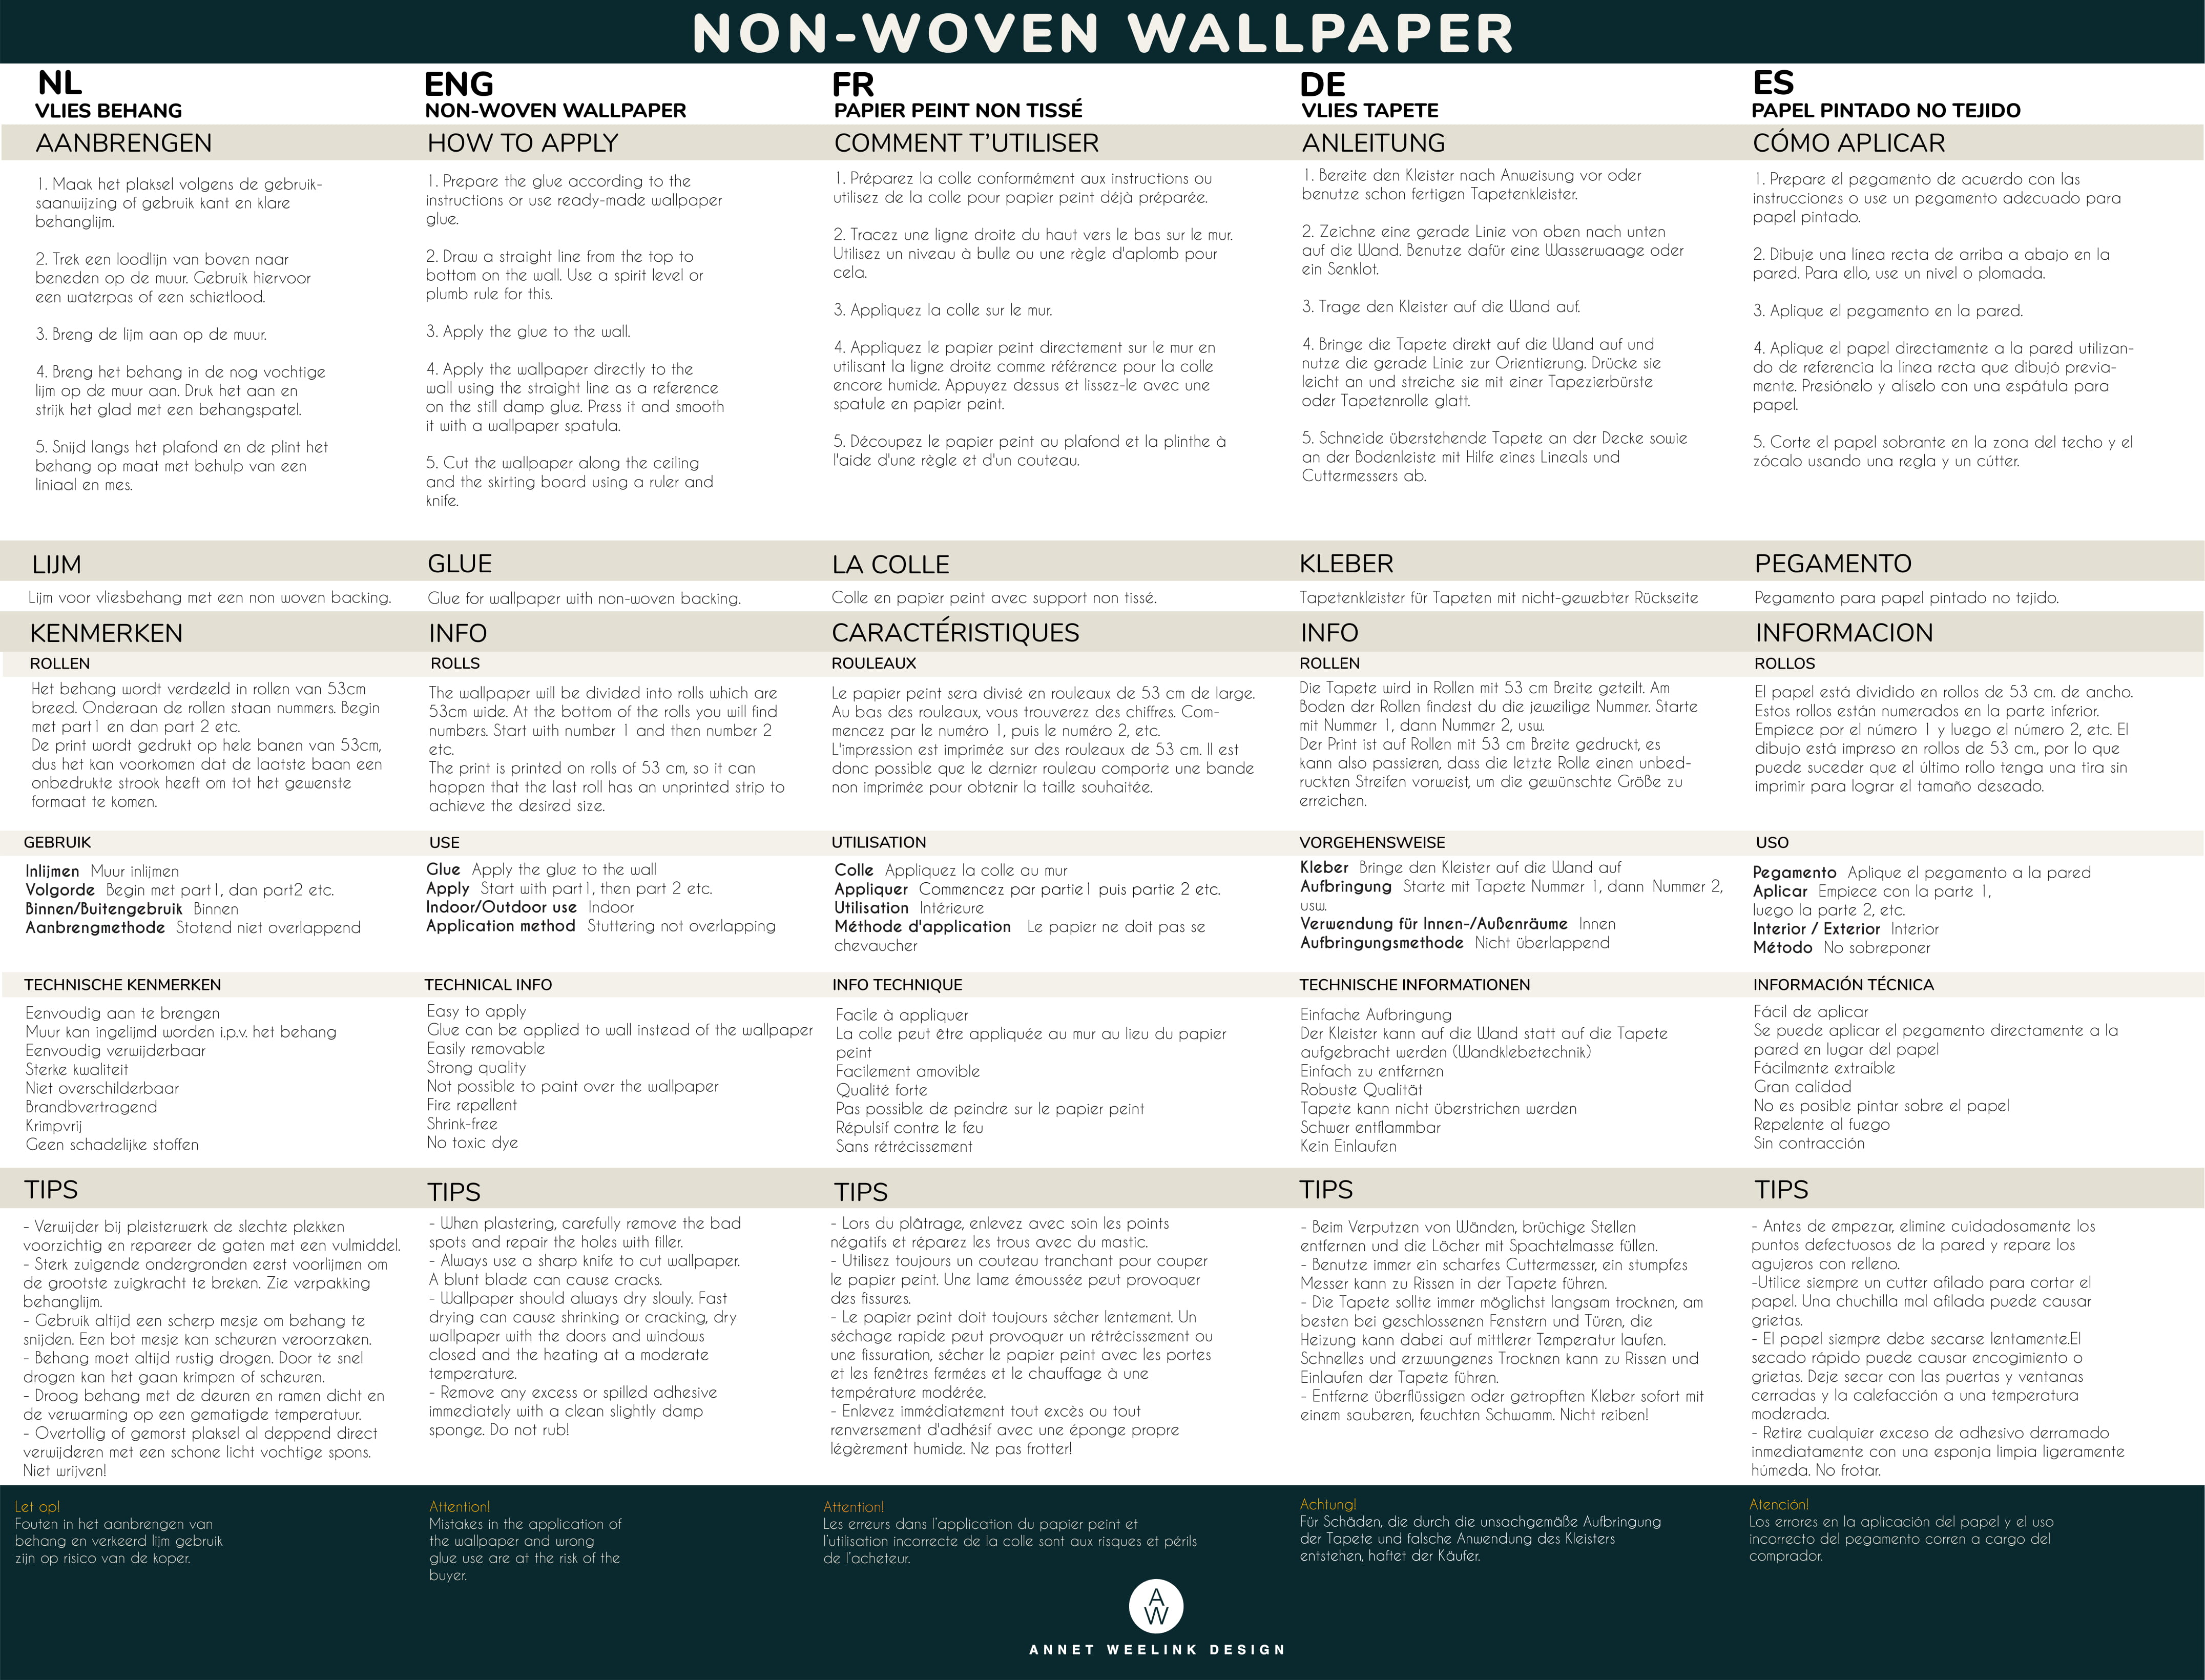 Wallpaper Manual WALL SIZED IMAGE – Annet Weelink Design